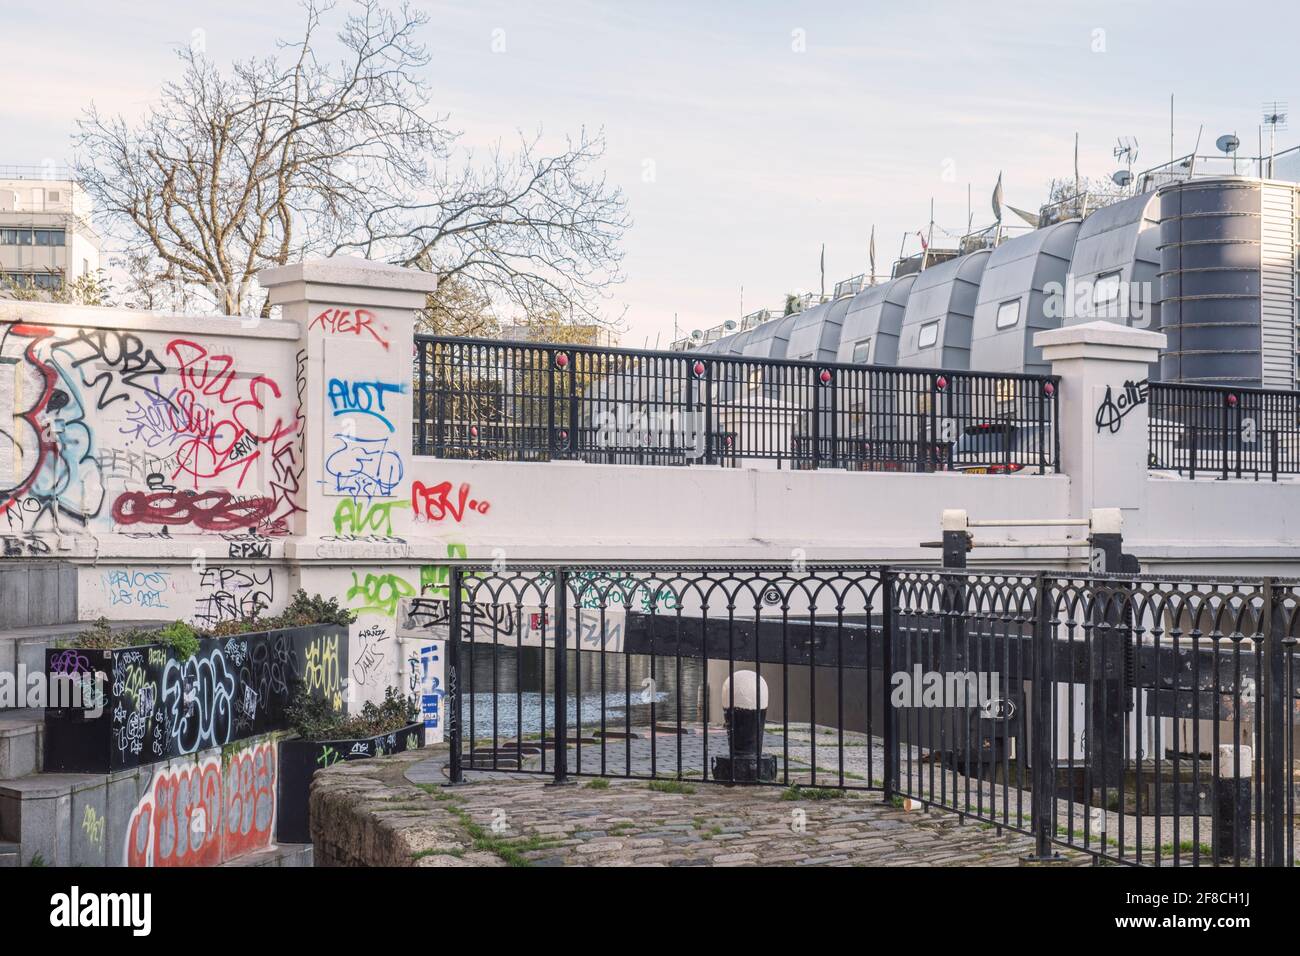 Kentish Town Road Bridge, Kentish Town Lock & Regent's Canal, Grand Union Walk residences, urban scene with graffiti tags, footpath, Camden, London Stock Photo